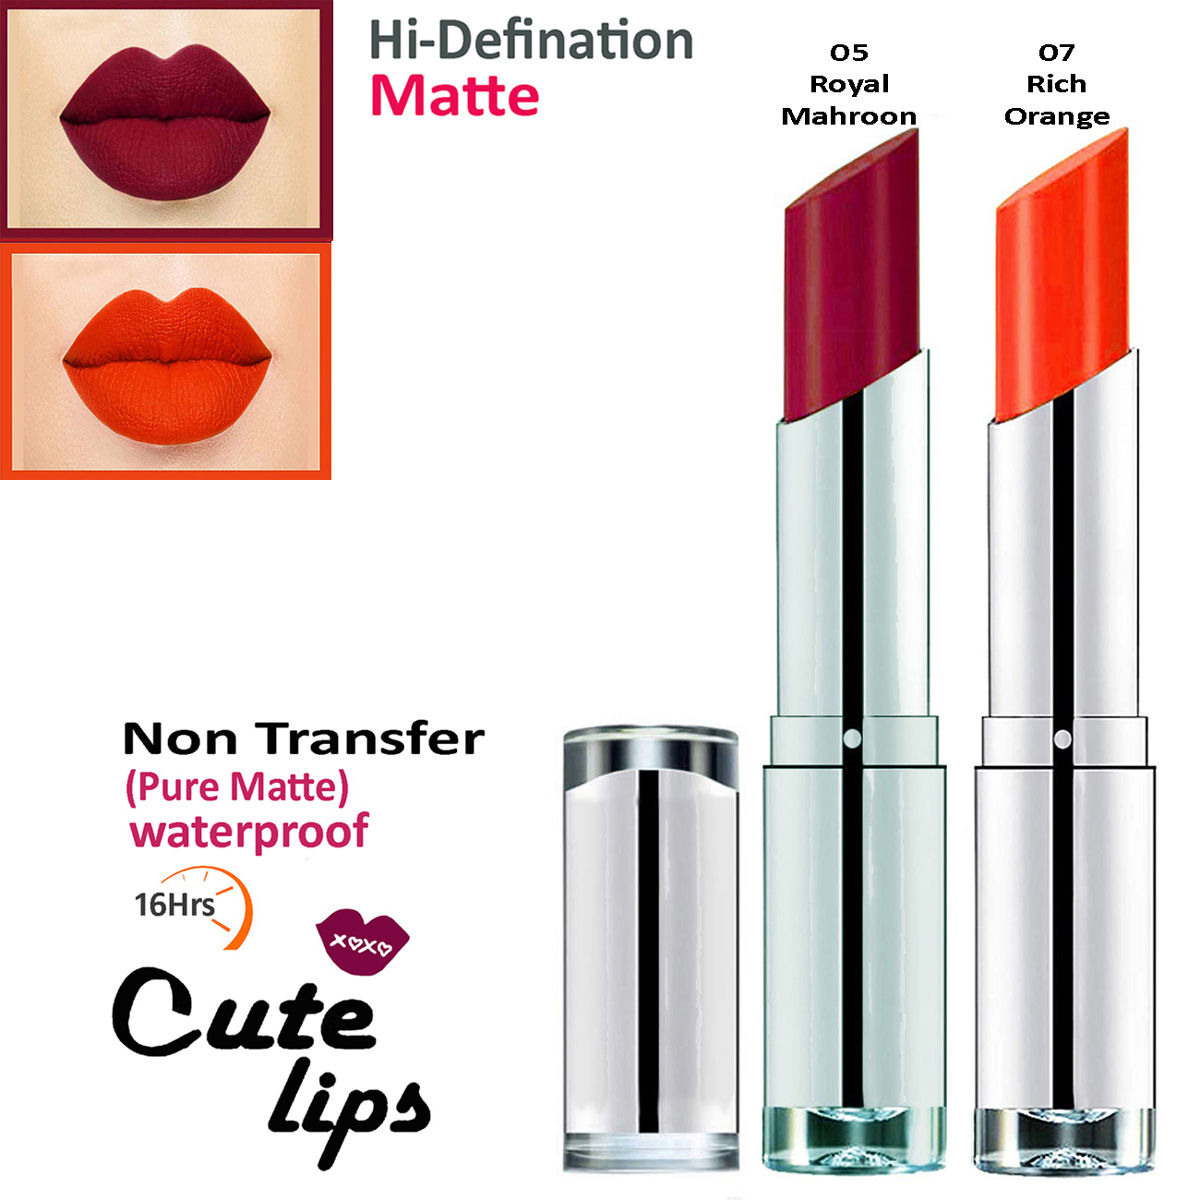 bq BLAQUE Cute Lips Non Transfer Matte Lipstick 2.4 gm each - 05 ...